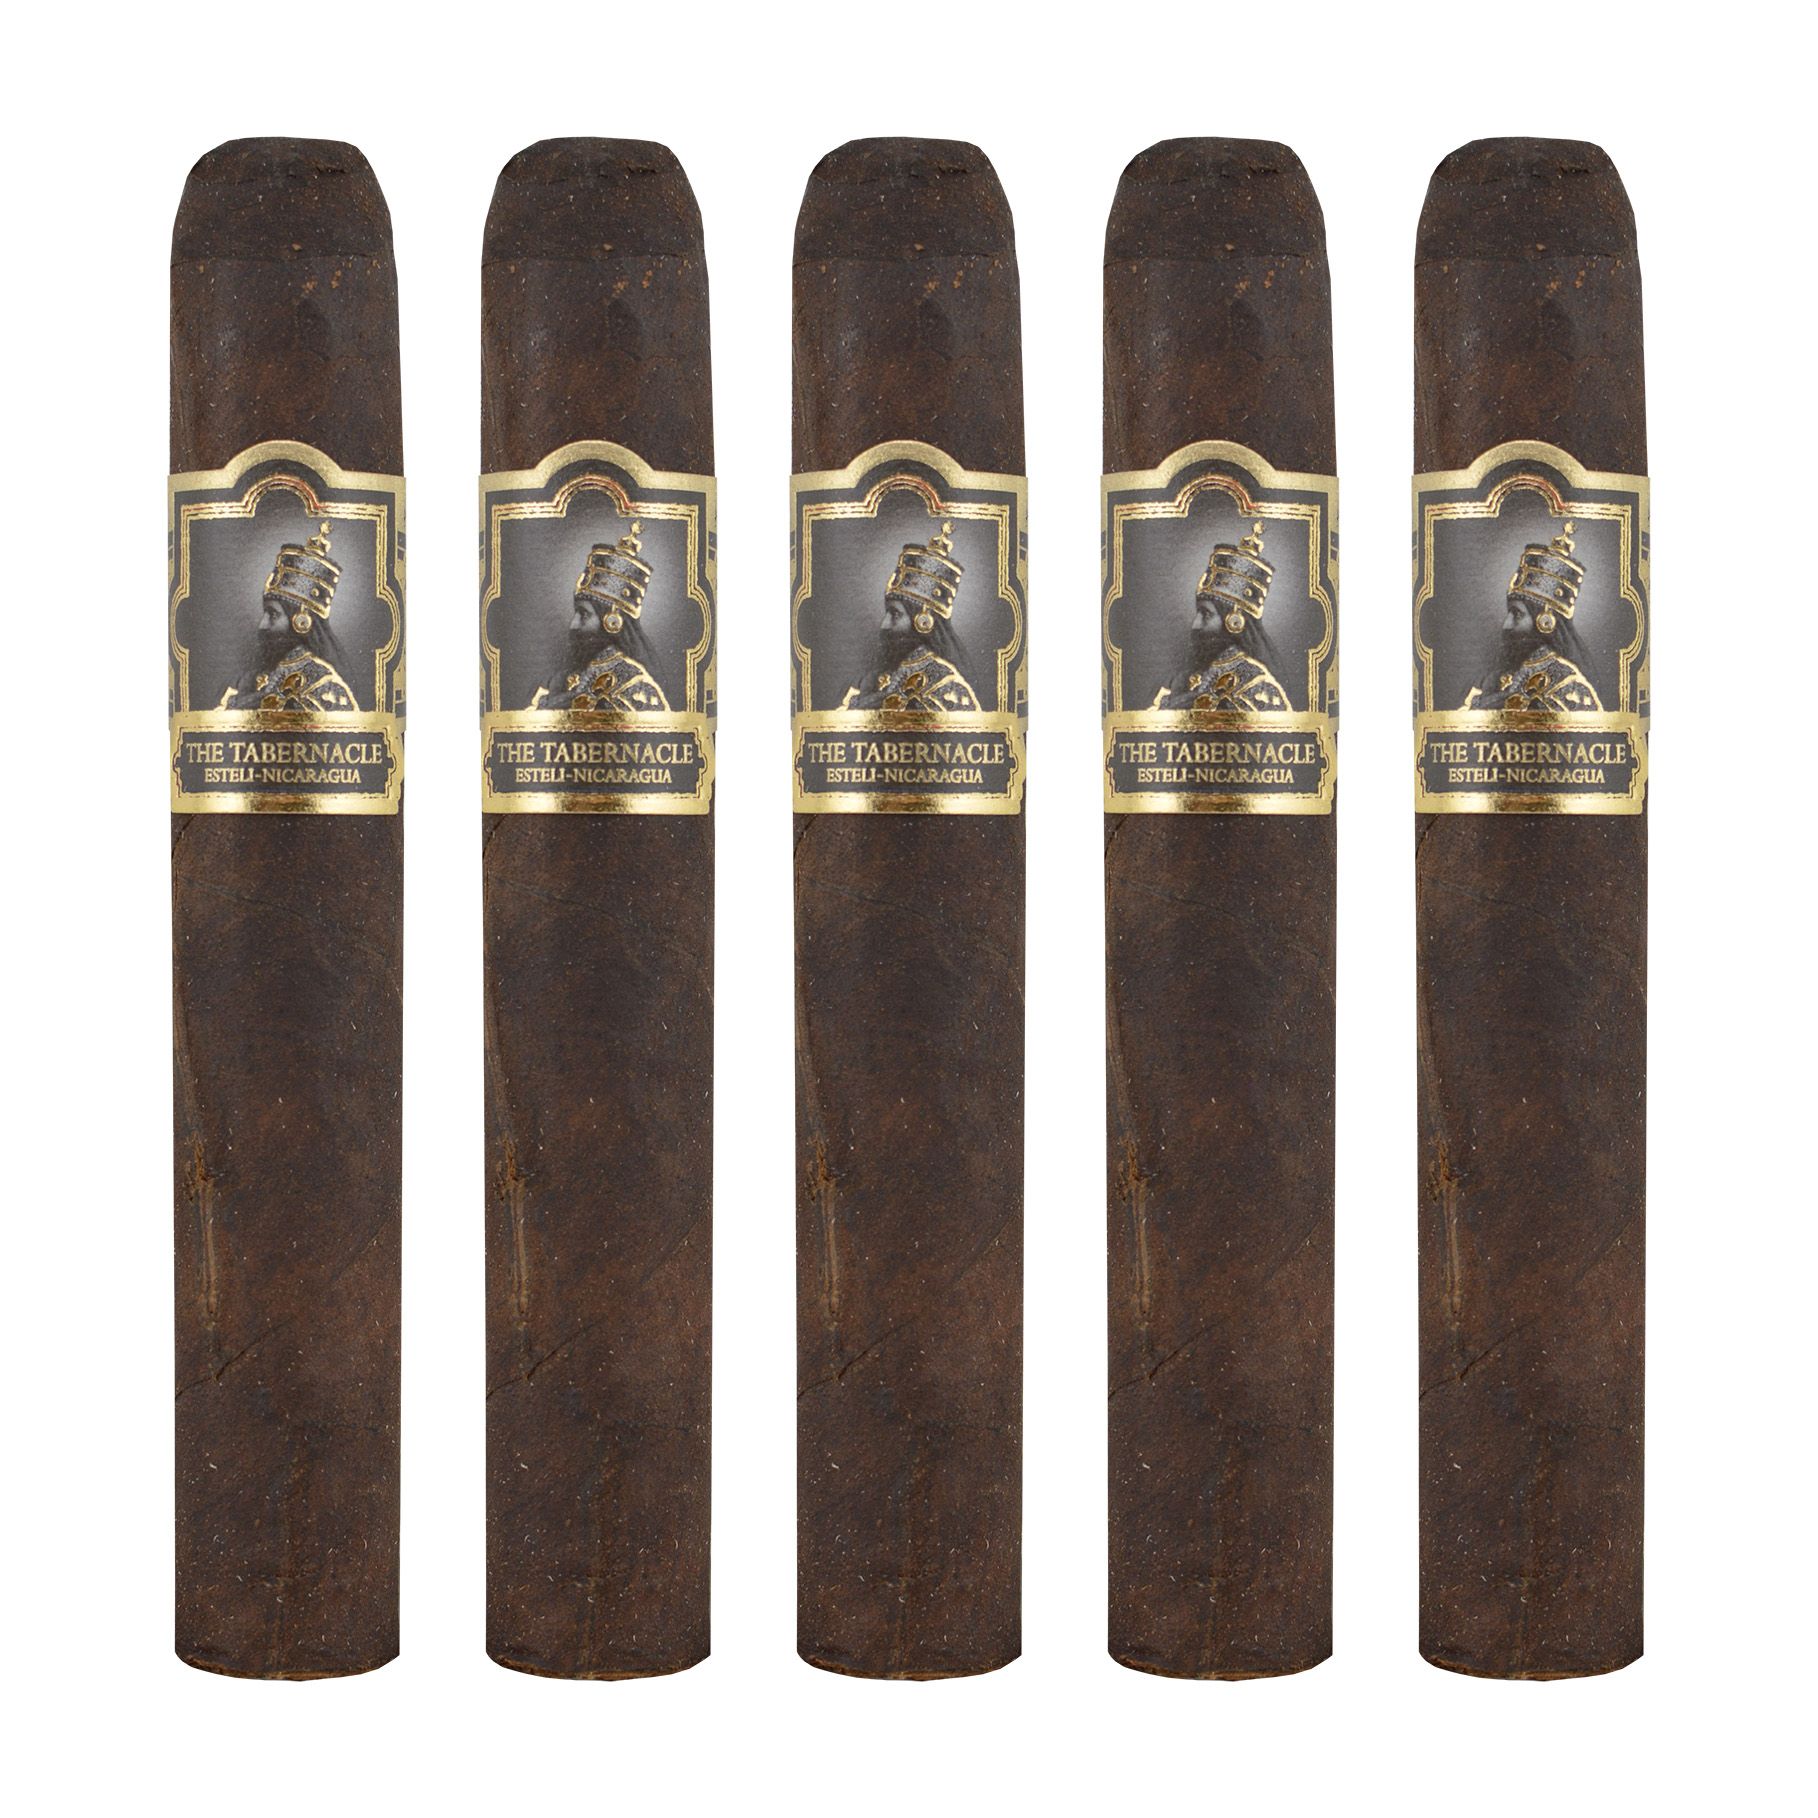 The Tabernacle Toro Cigar - 5 Pack